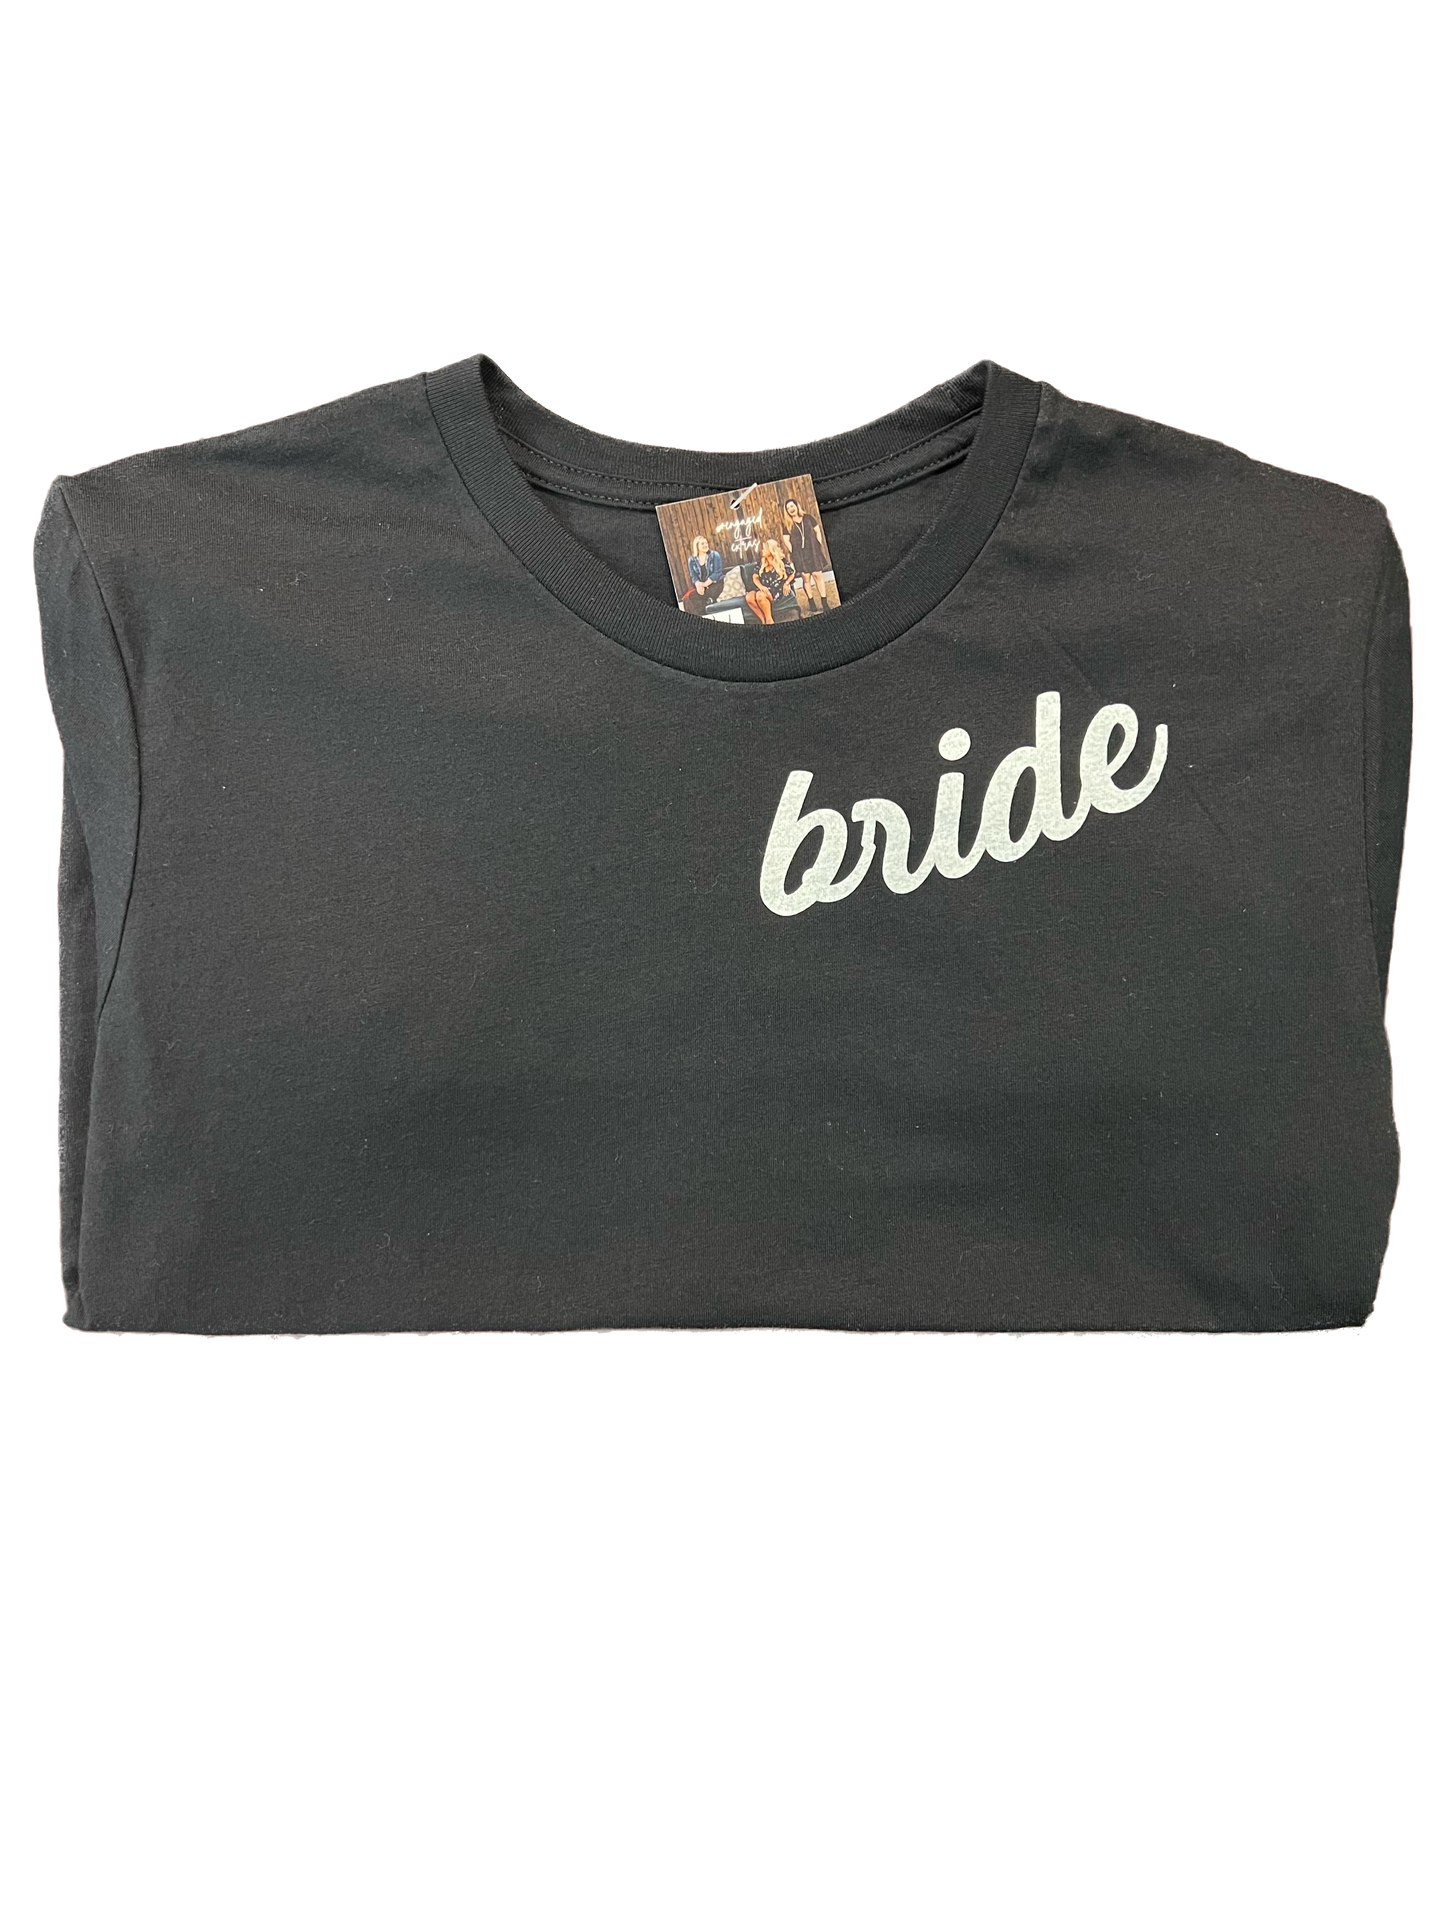 Classic Bride Shirt